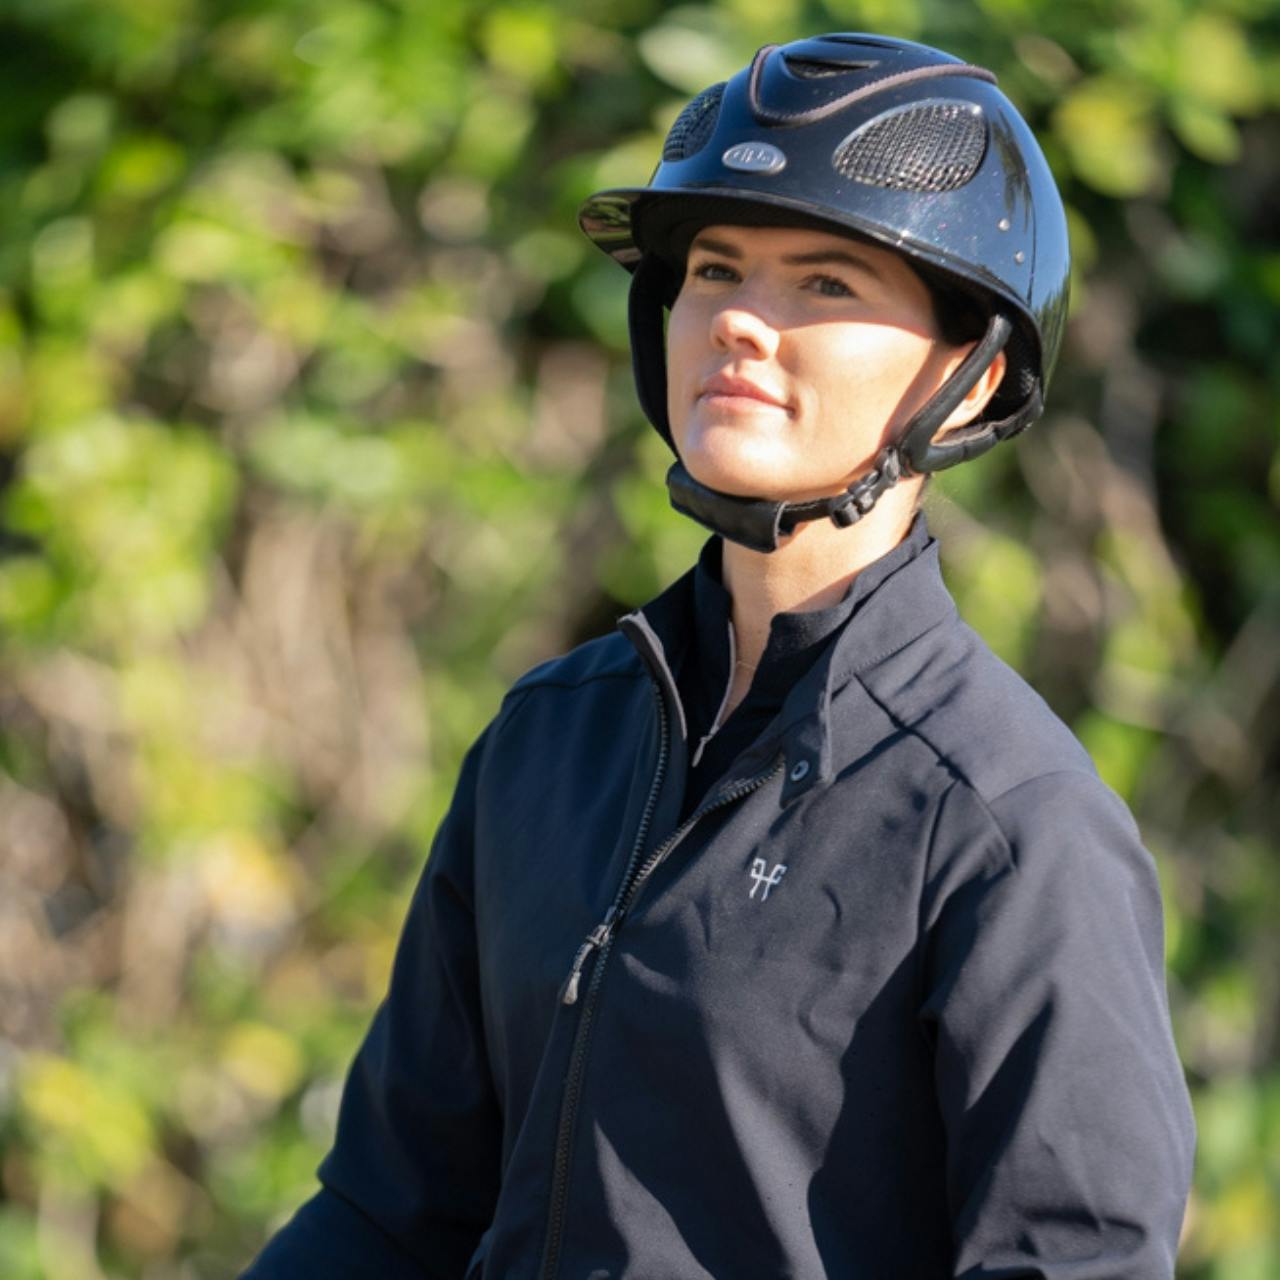 Rider Maggie McAlary